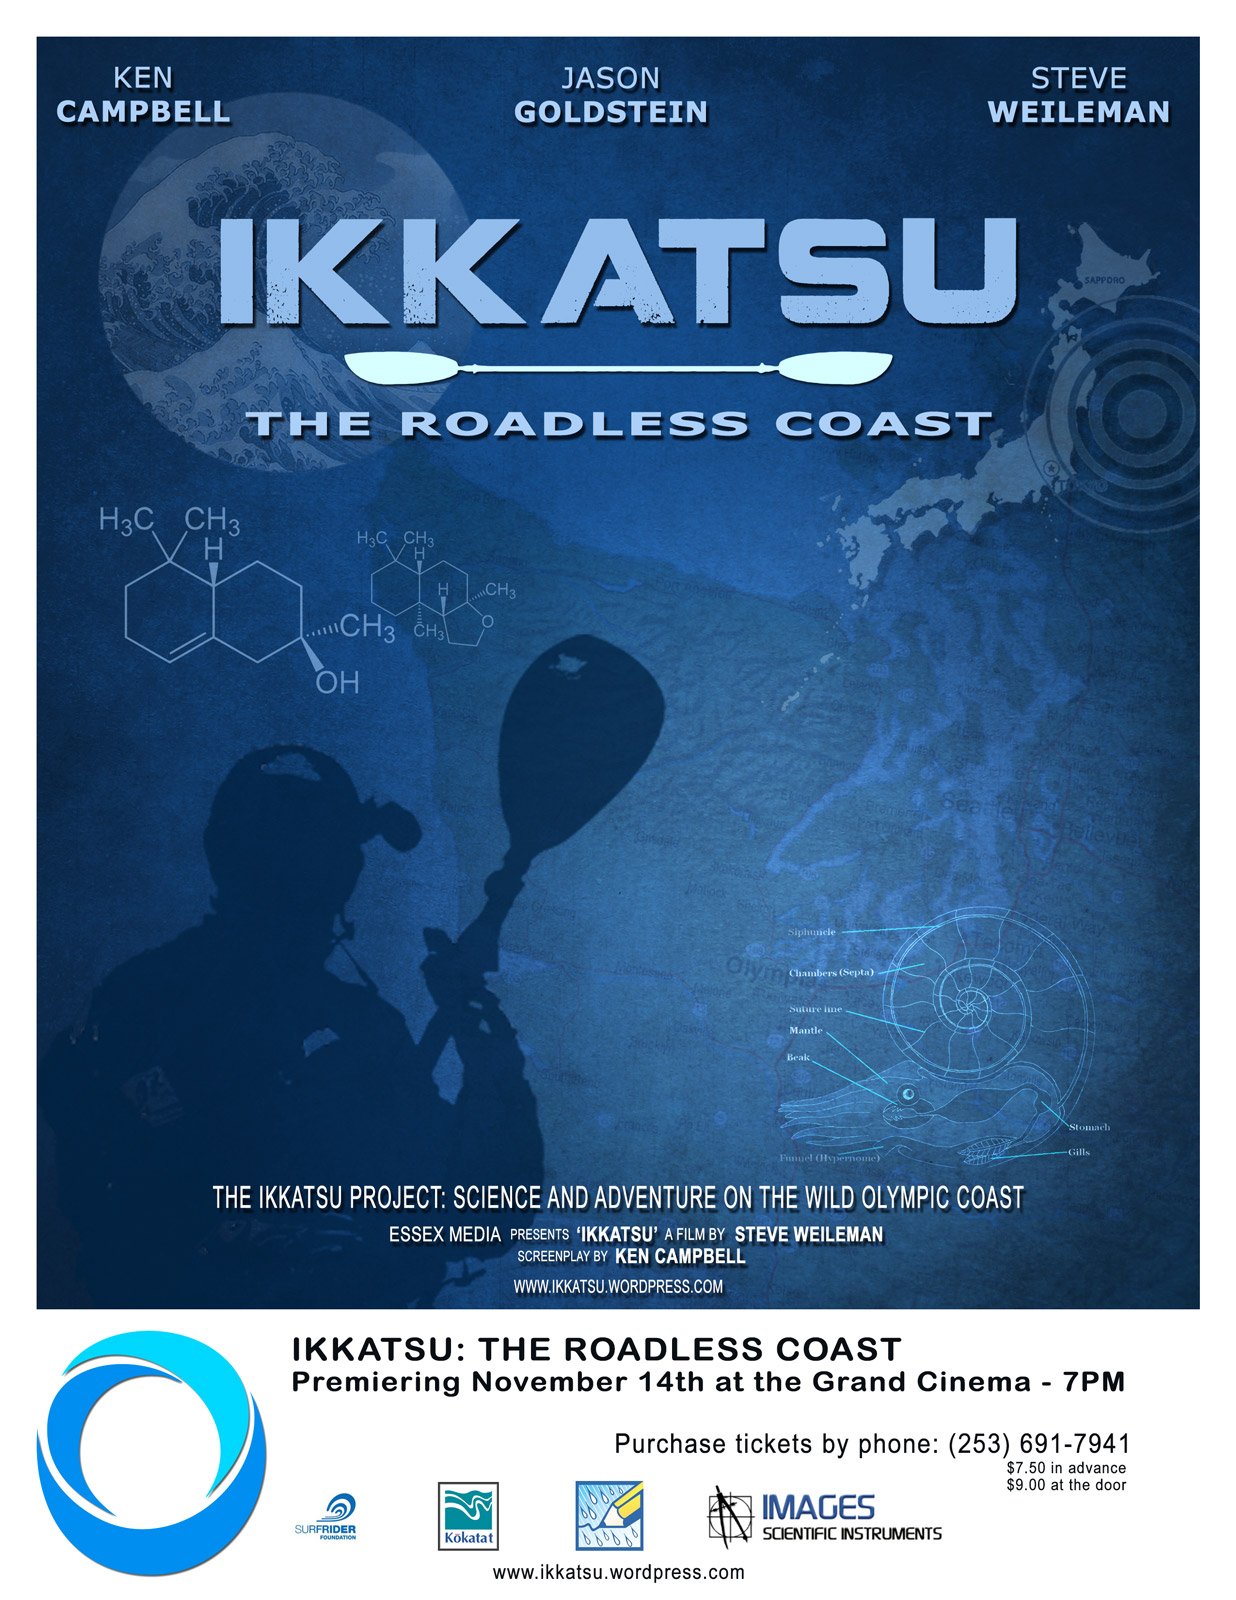 Poster of the movie Ikkatsu: The Roadless Coast